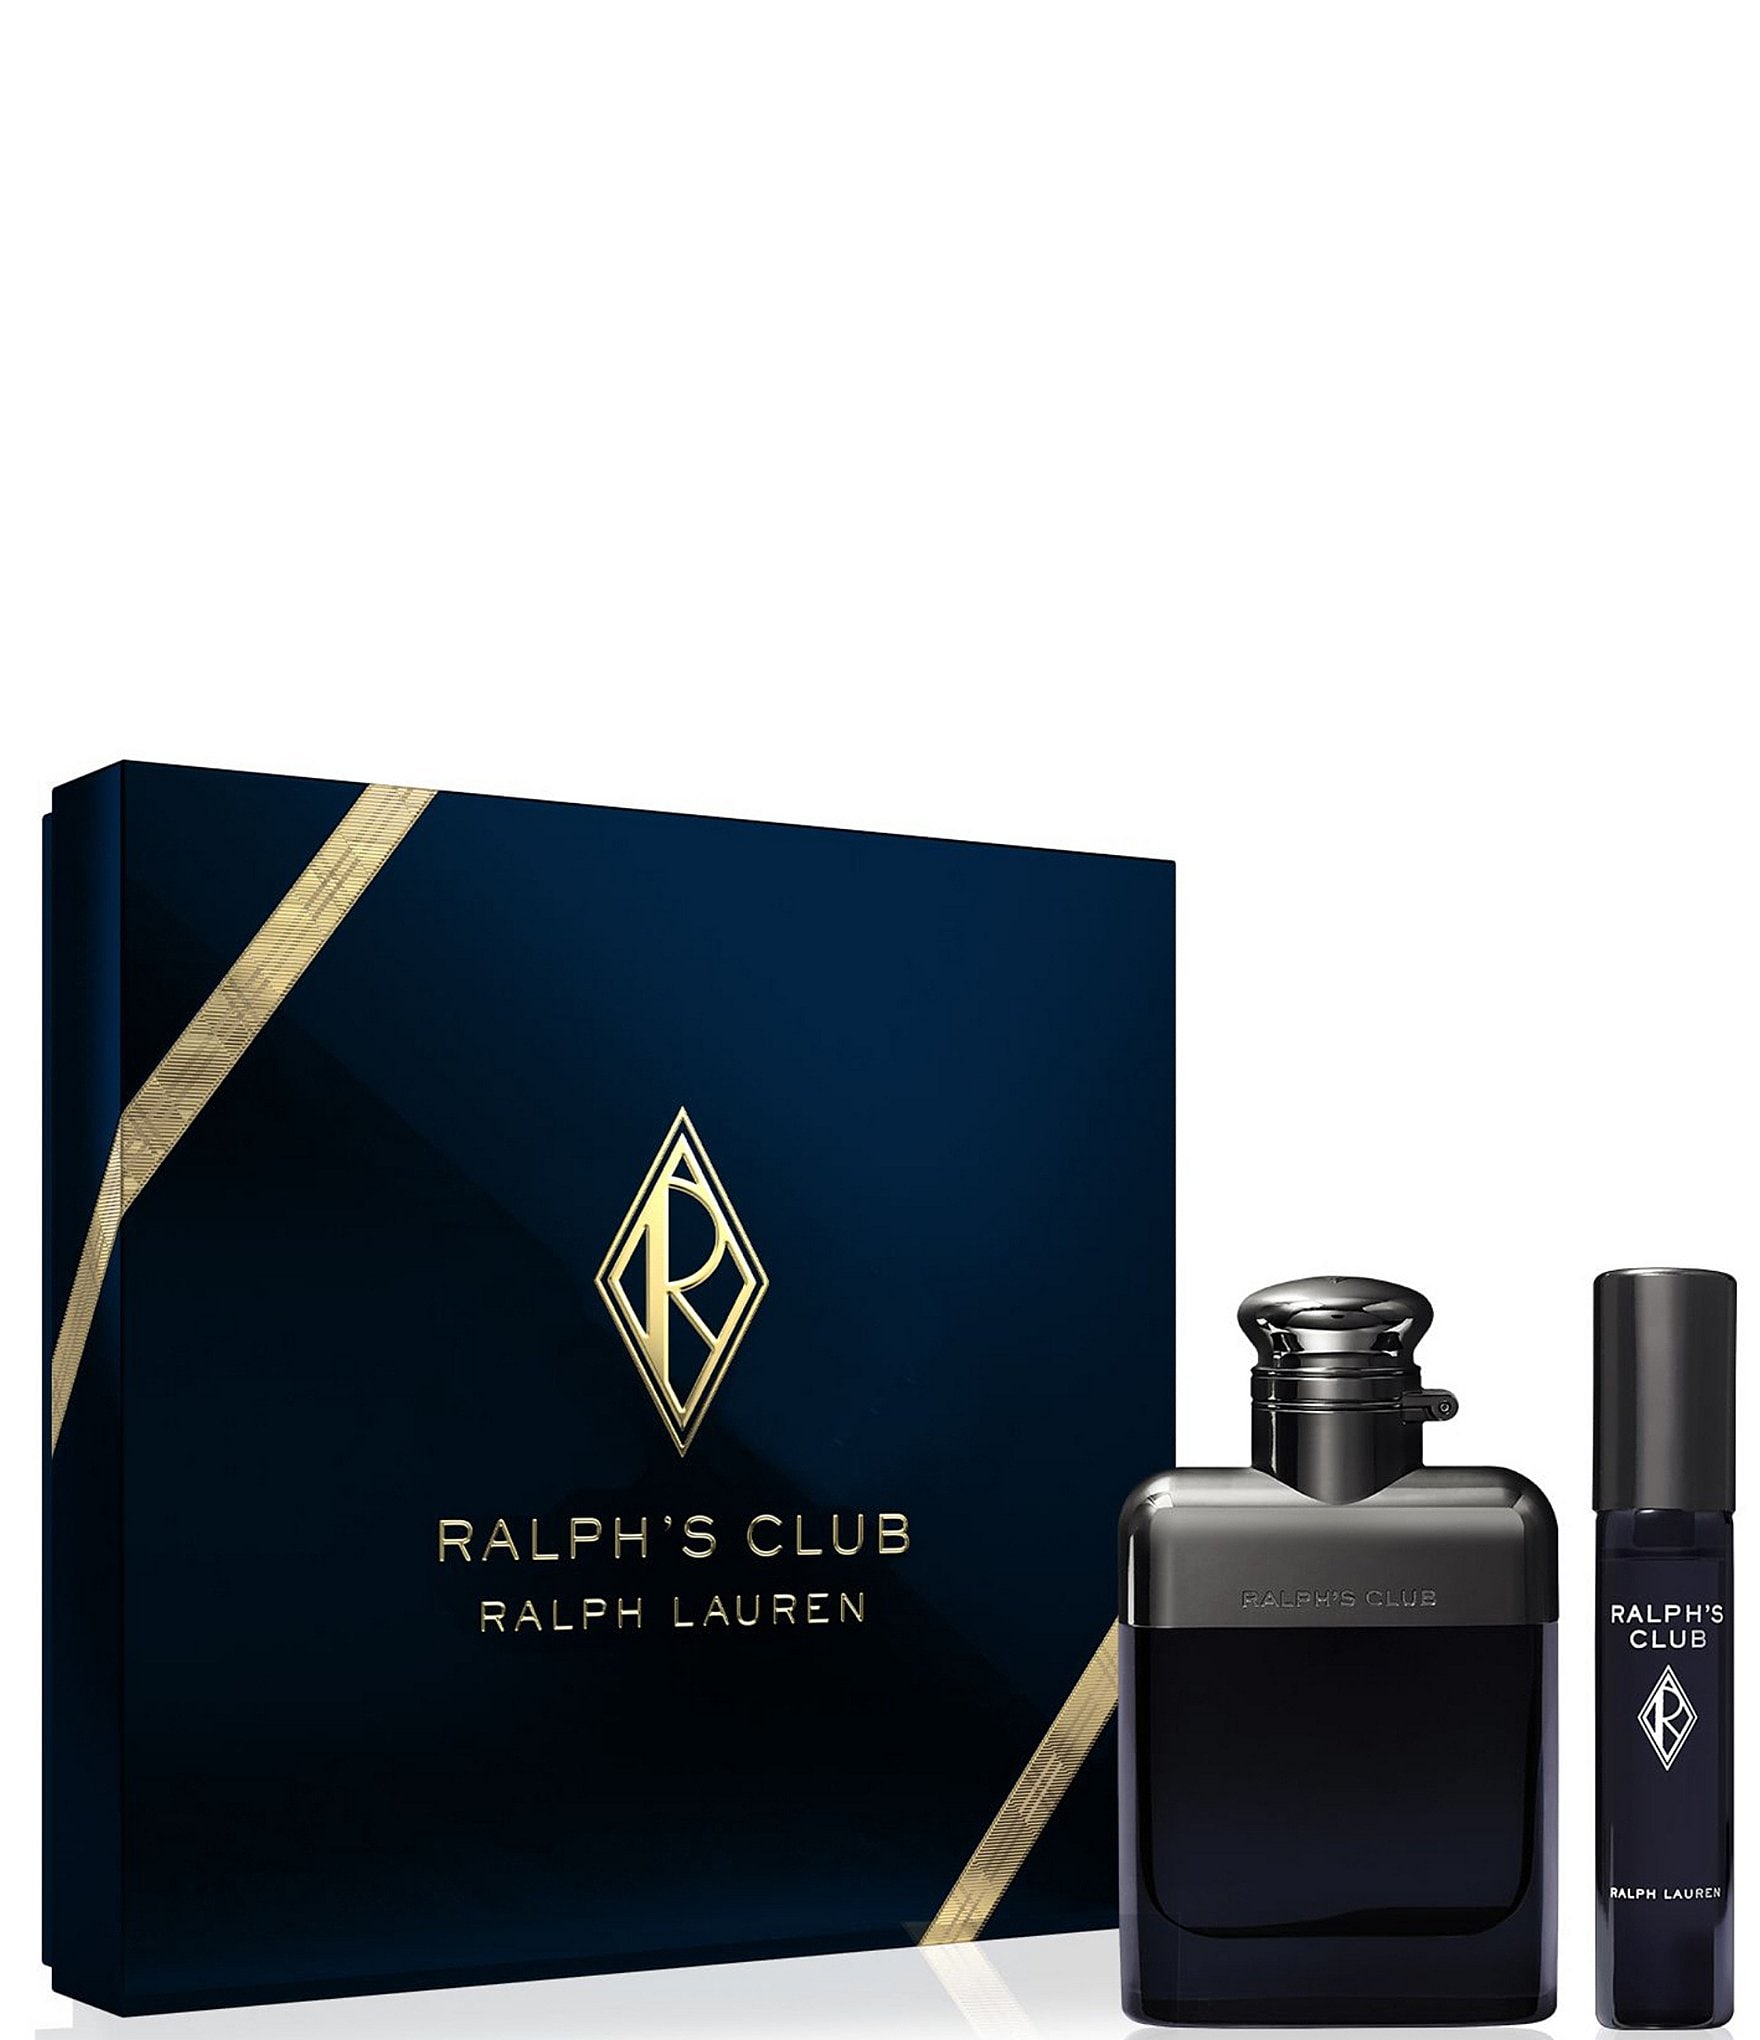 ralph lauren cologne: Fragrance & Perfume Gifts & Value Sets